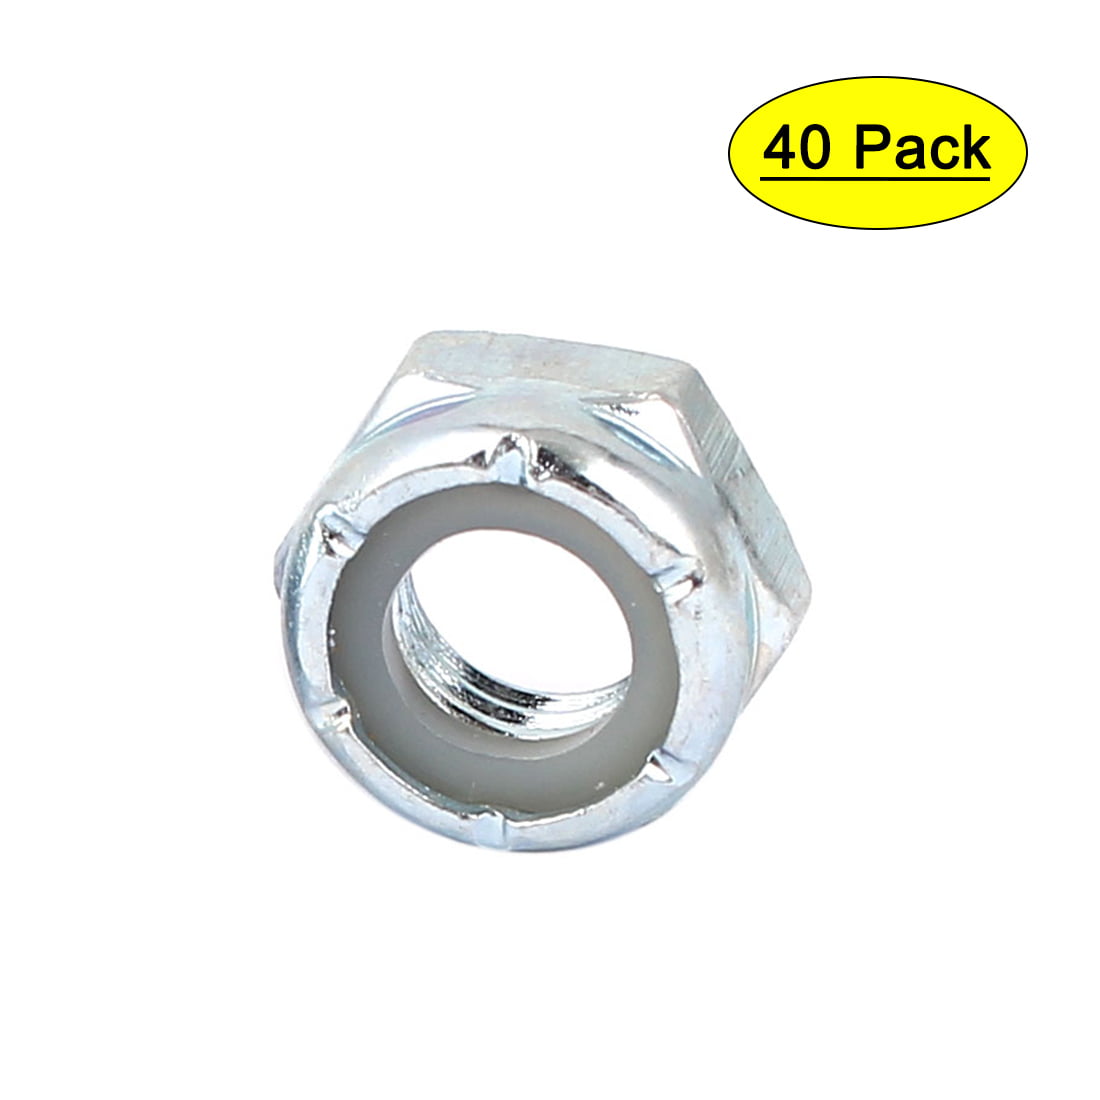 3/8-16 Stainless Steel Nylon Insert Lock Hex Nut UNC Nylock Qty 100 